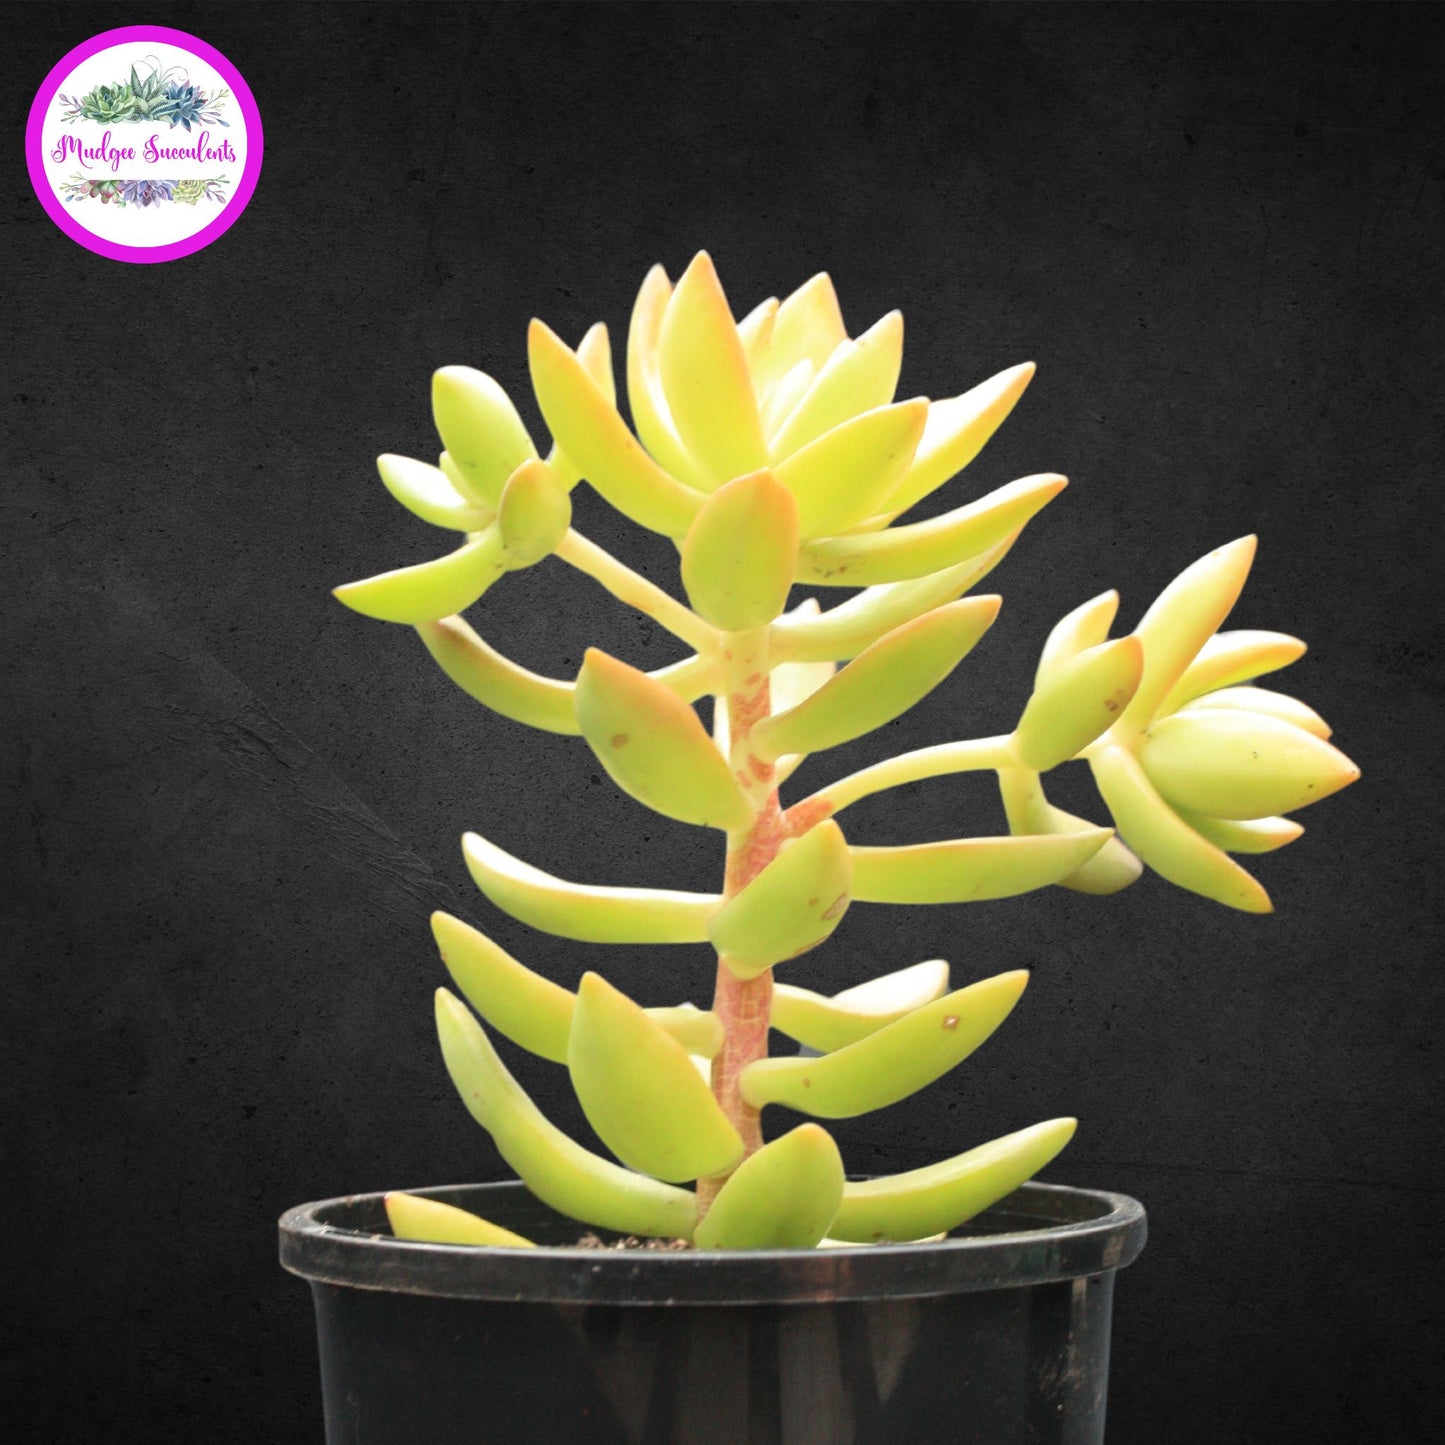 Succulent Plant - Sedum adolphi - Mudgee Succulents Online Shop